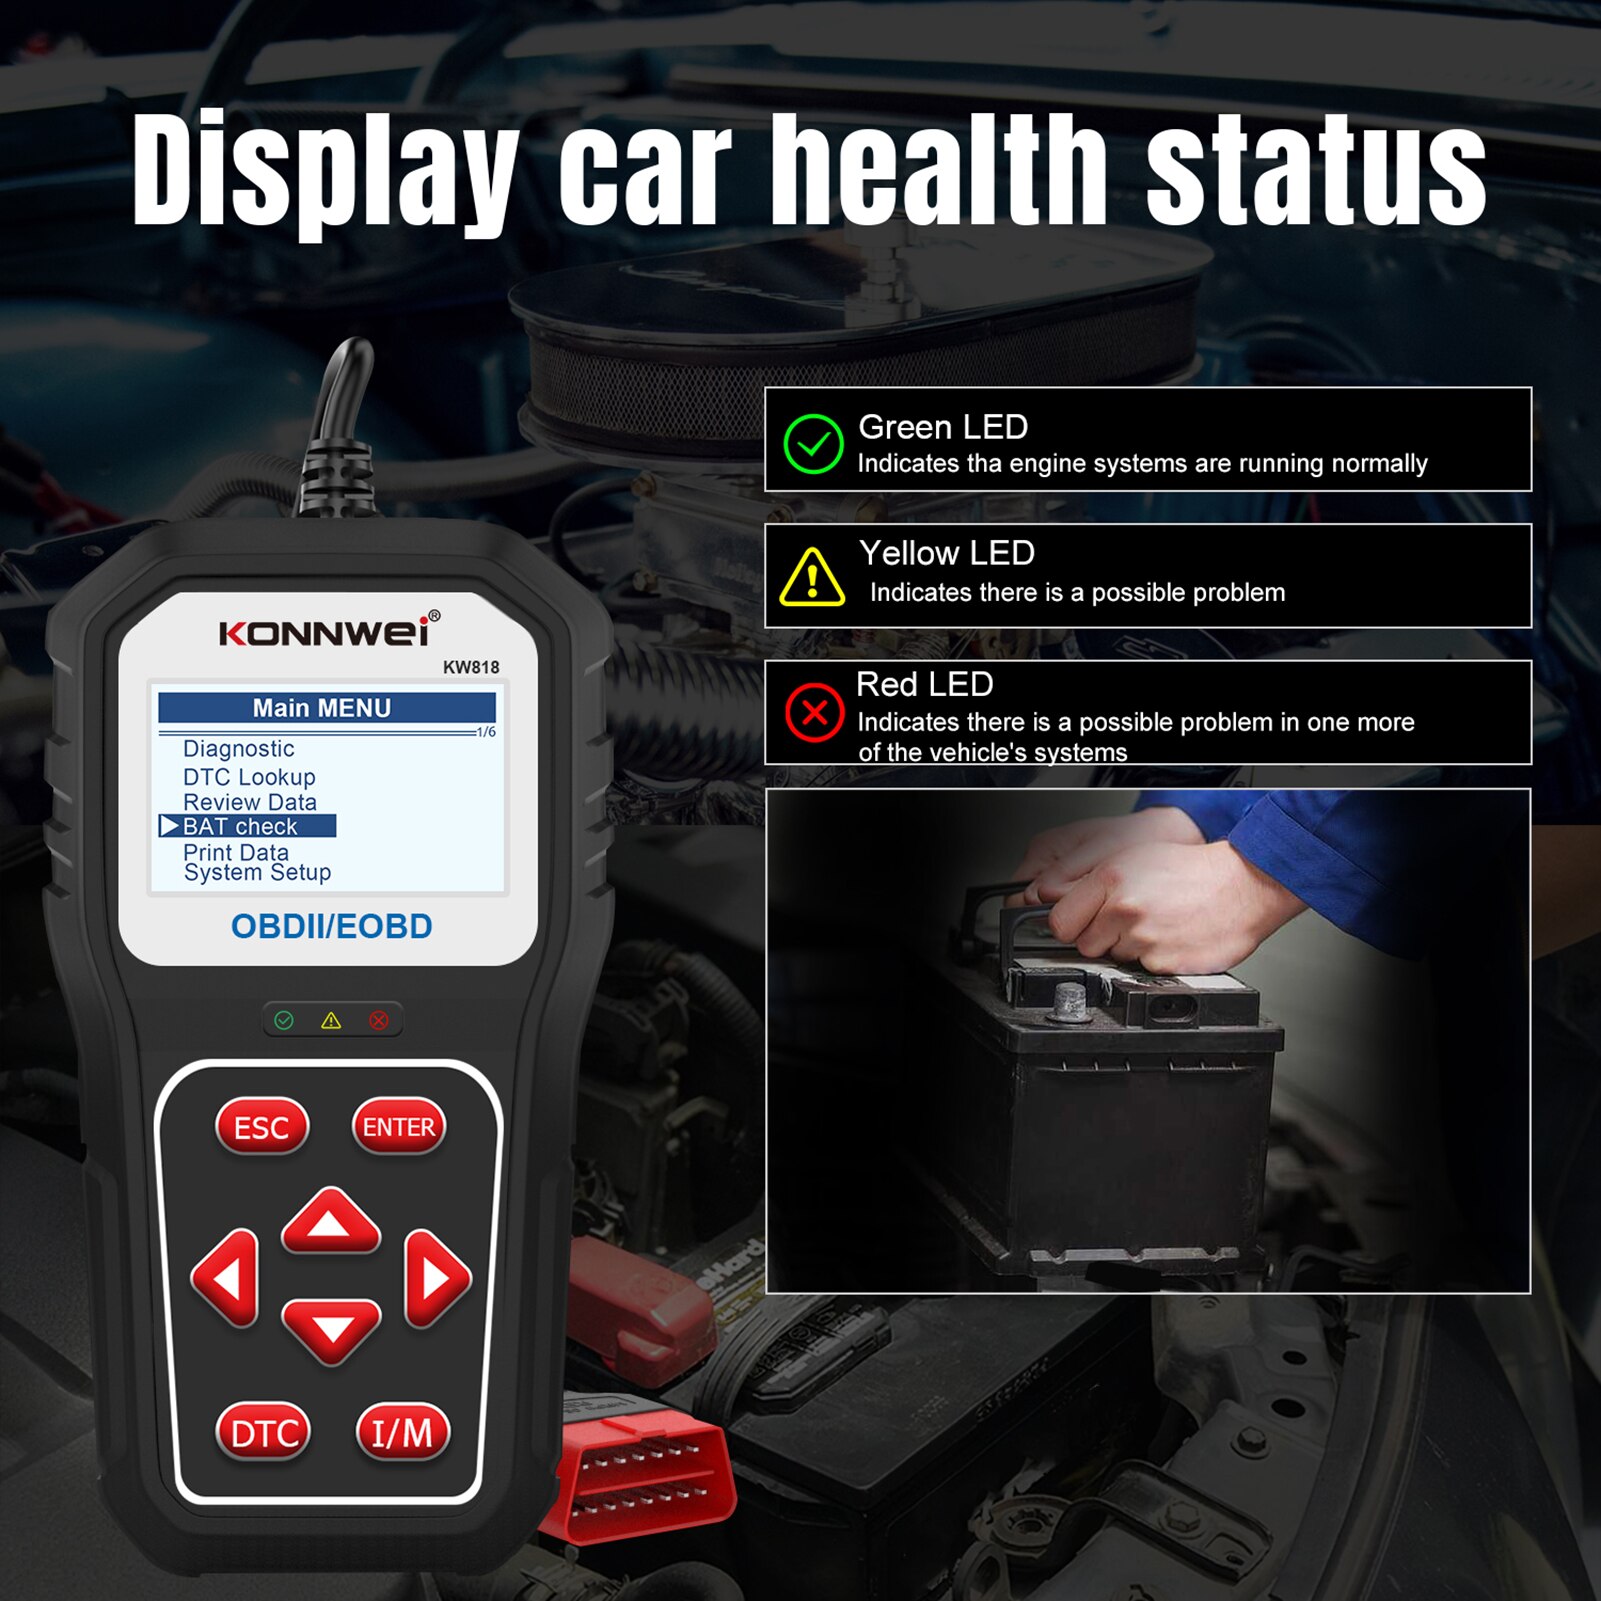 KONNWEI KW818 OBD2 Scaner Car Diagnostic Tool